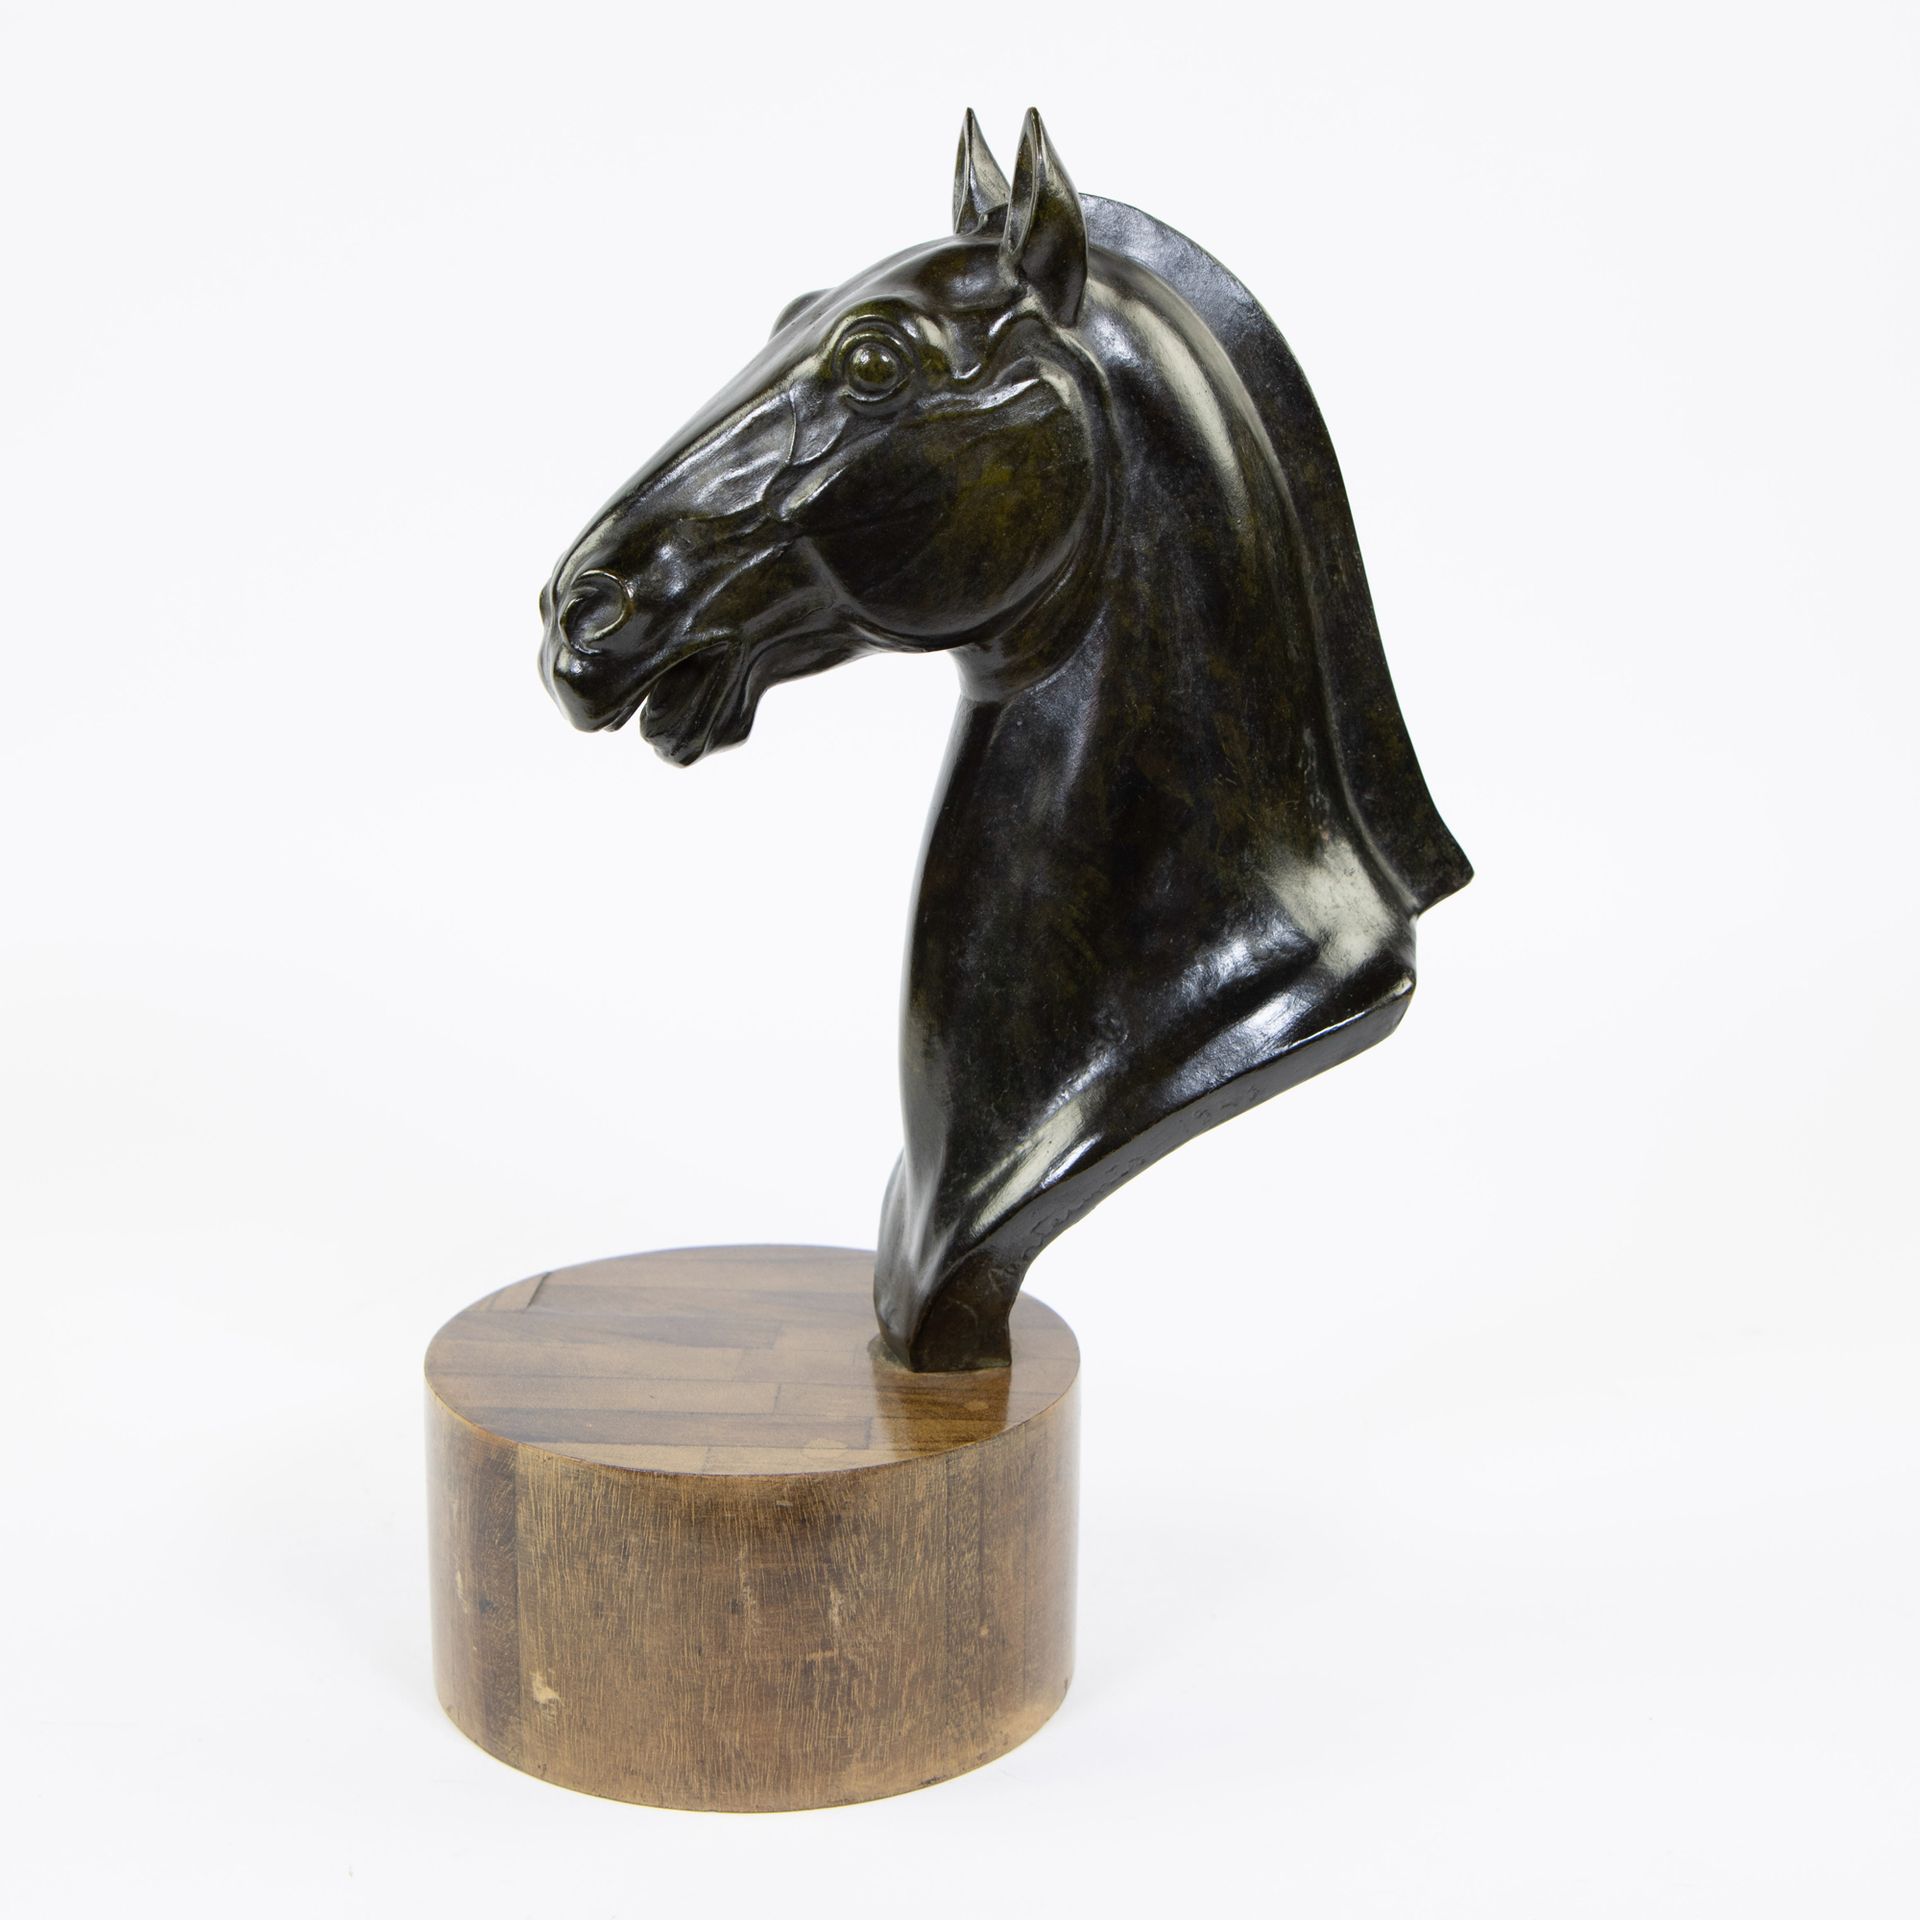 Jan ANTEUNIS (1896-1973) Jan ANTEUNIS (1896-1973)
Bronzeskulptur eines Pferdekop&hellip;